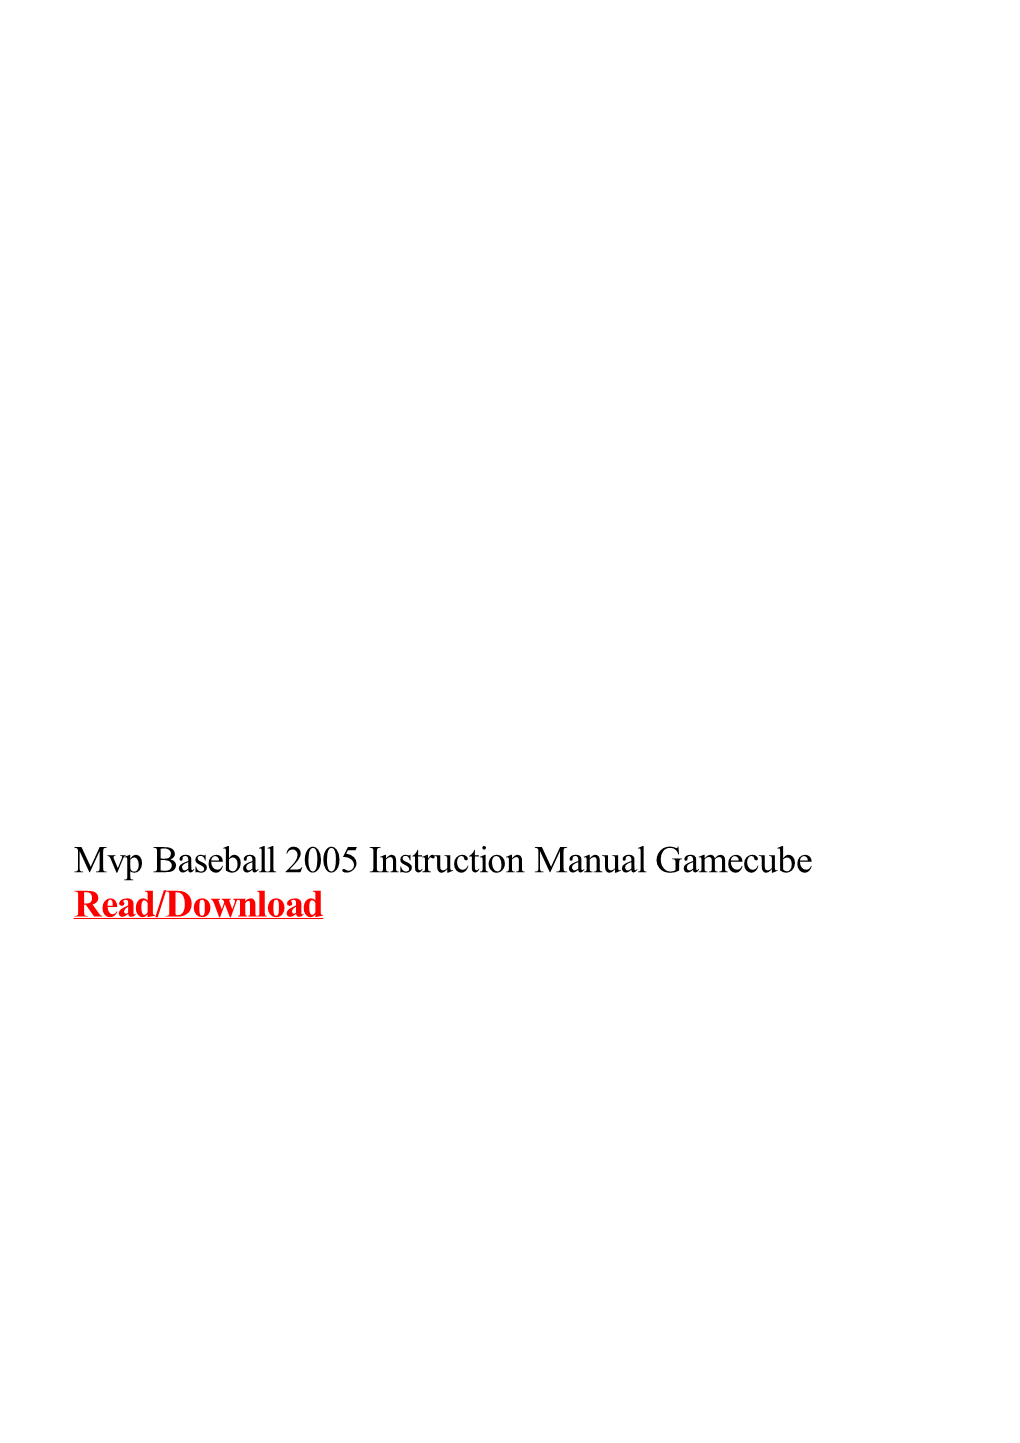 Mvp Baseball 2005 Instruction Manual Gamecube.Pdf